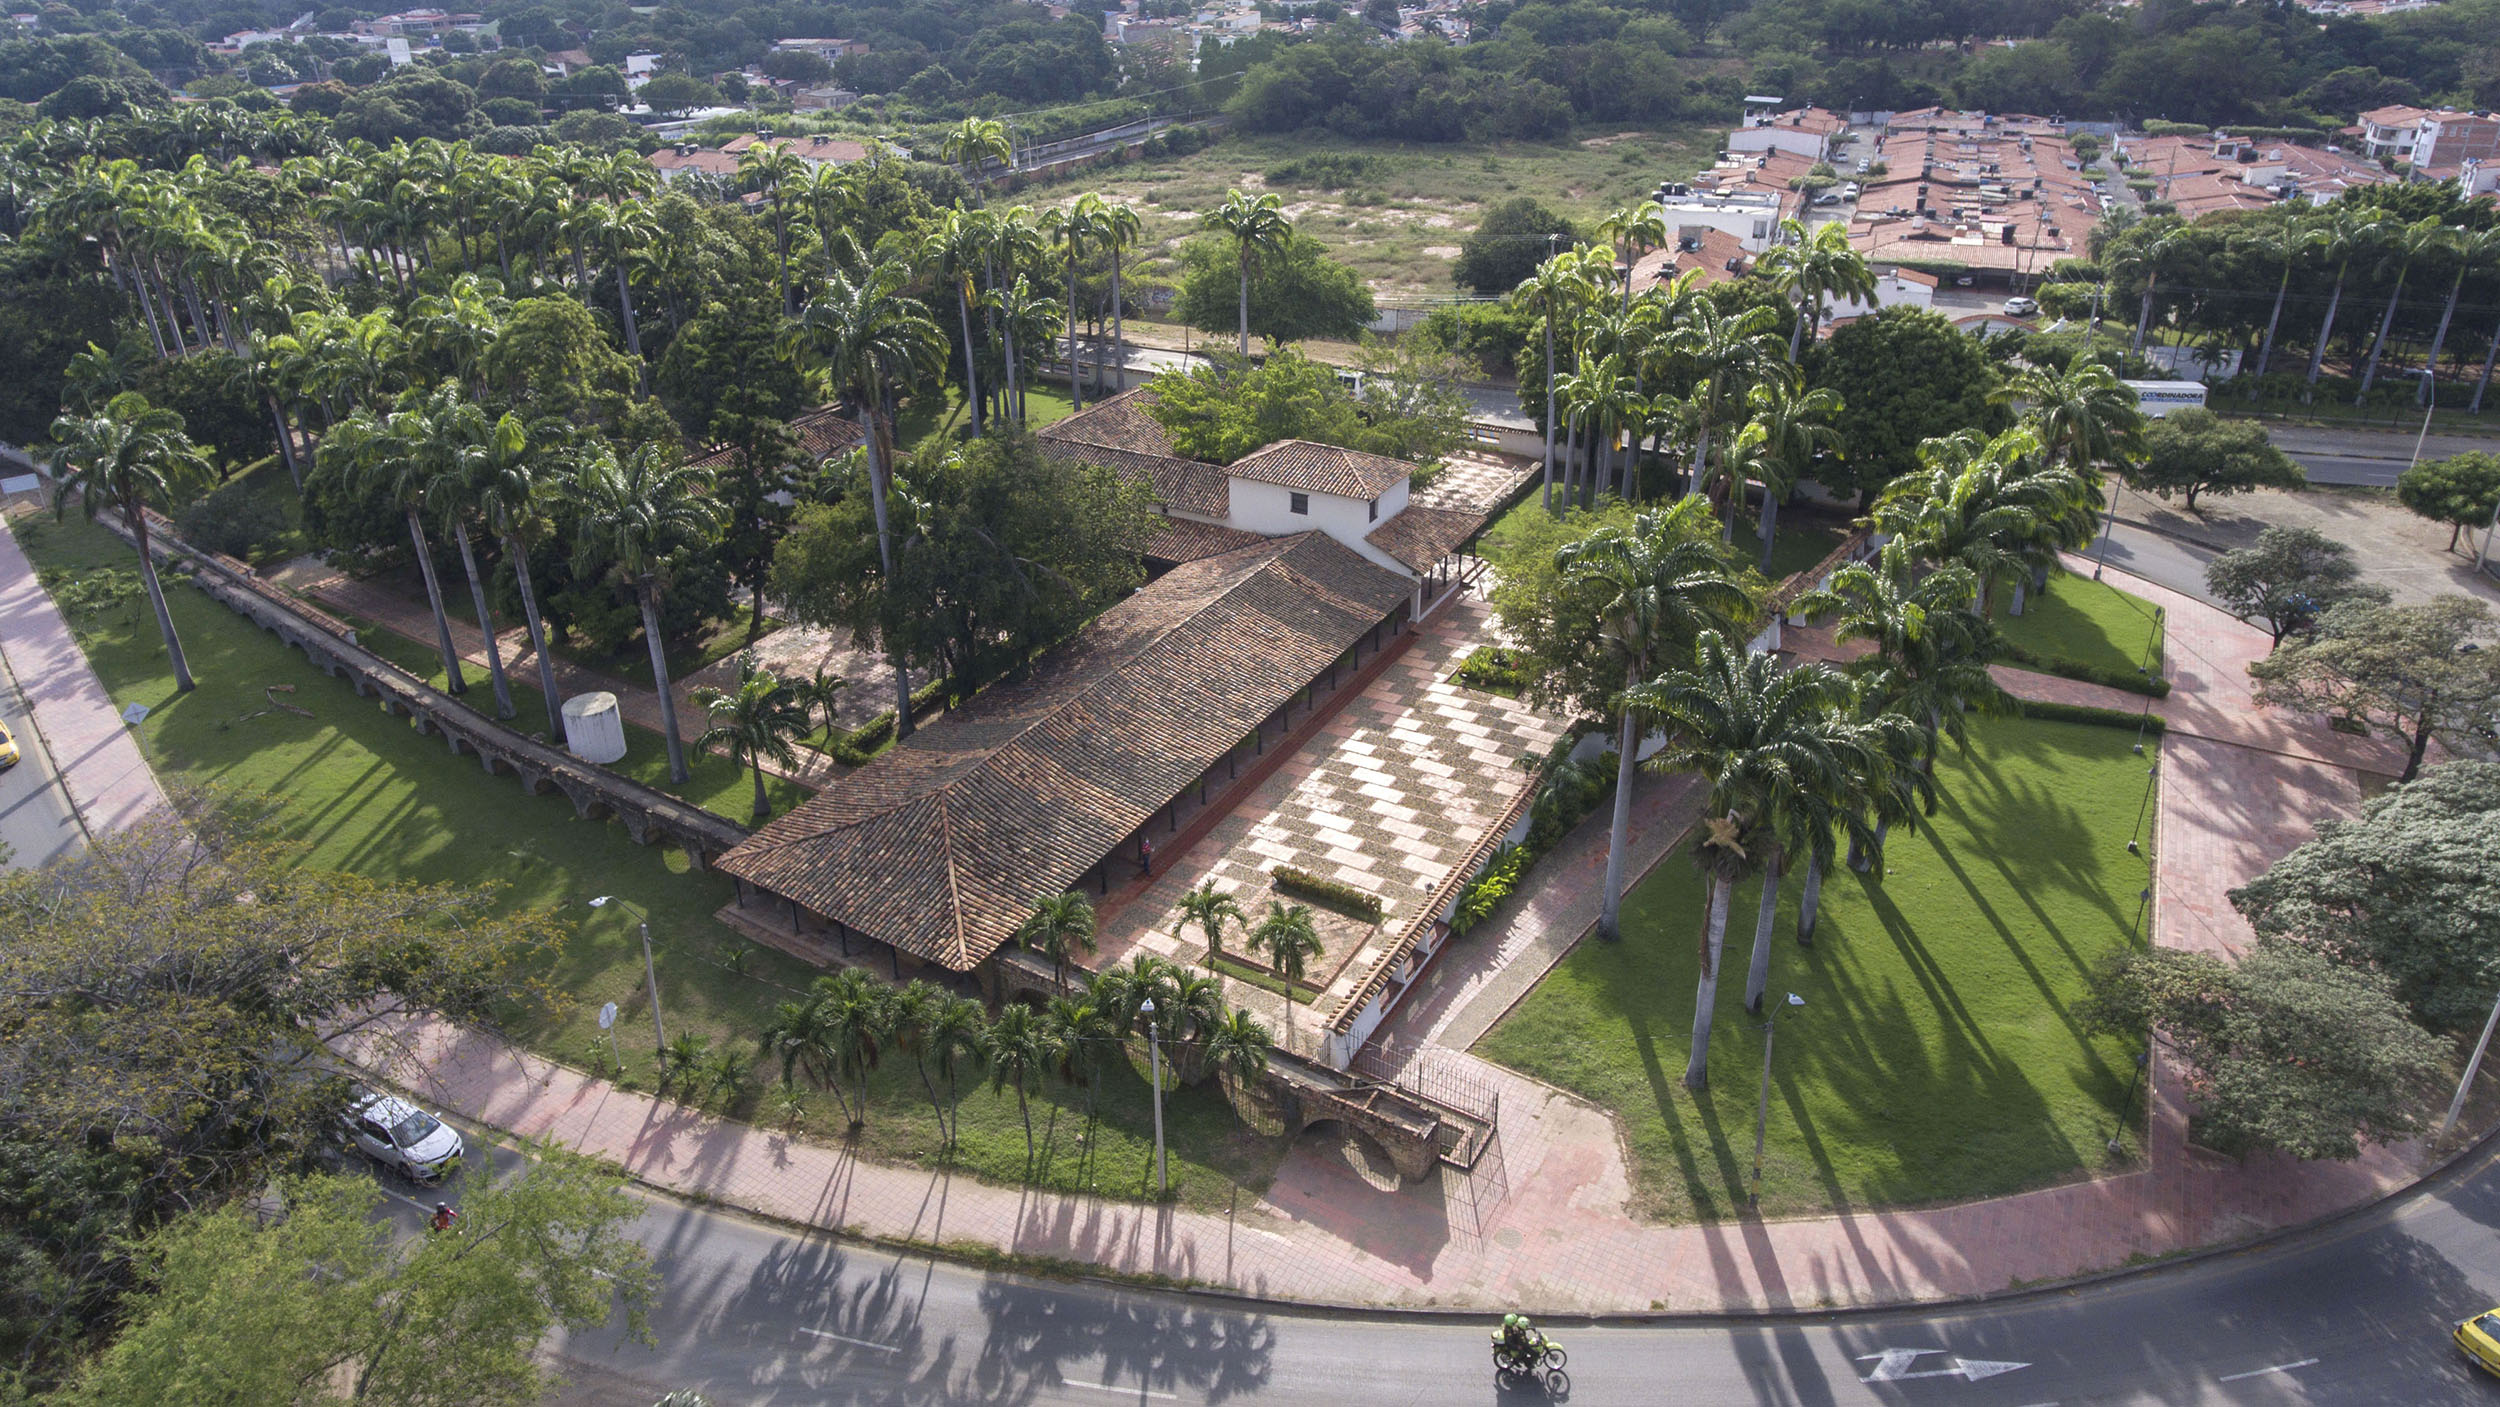 Vista aérea de la casa natal del General Santander en Villa del Rosario